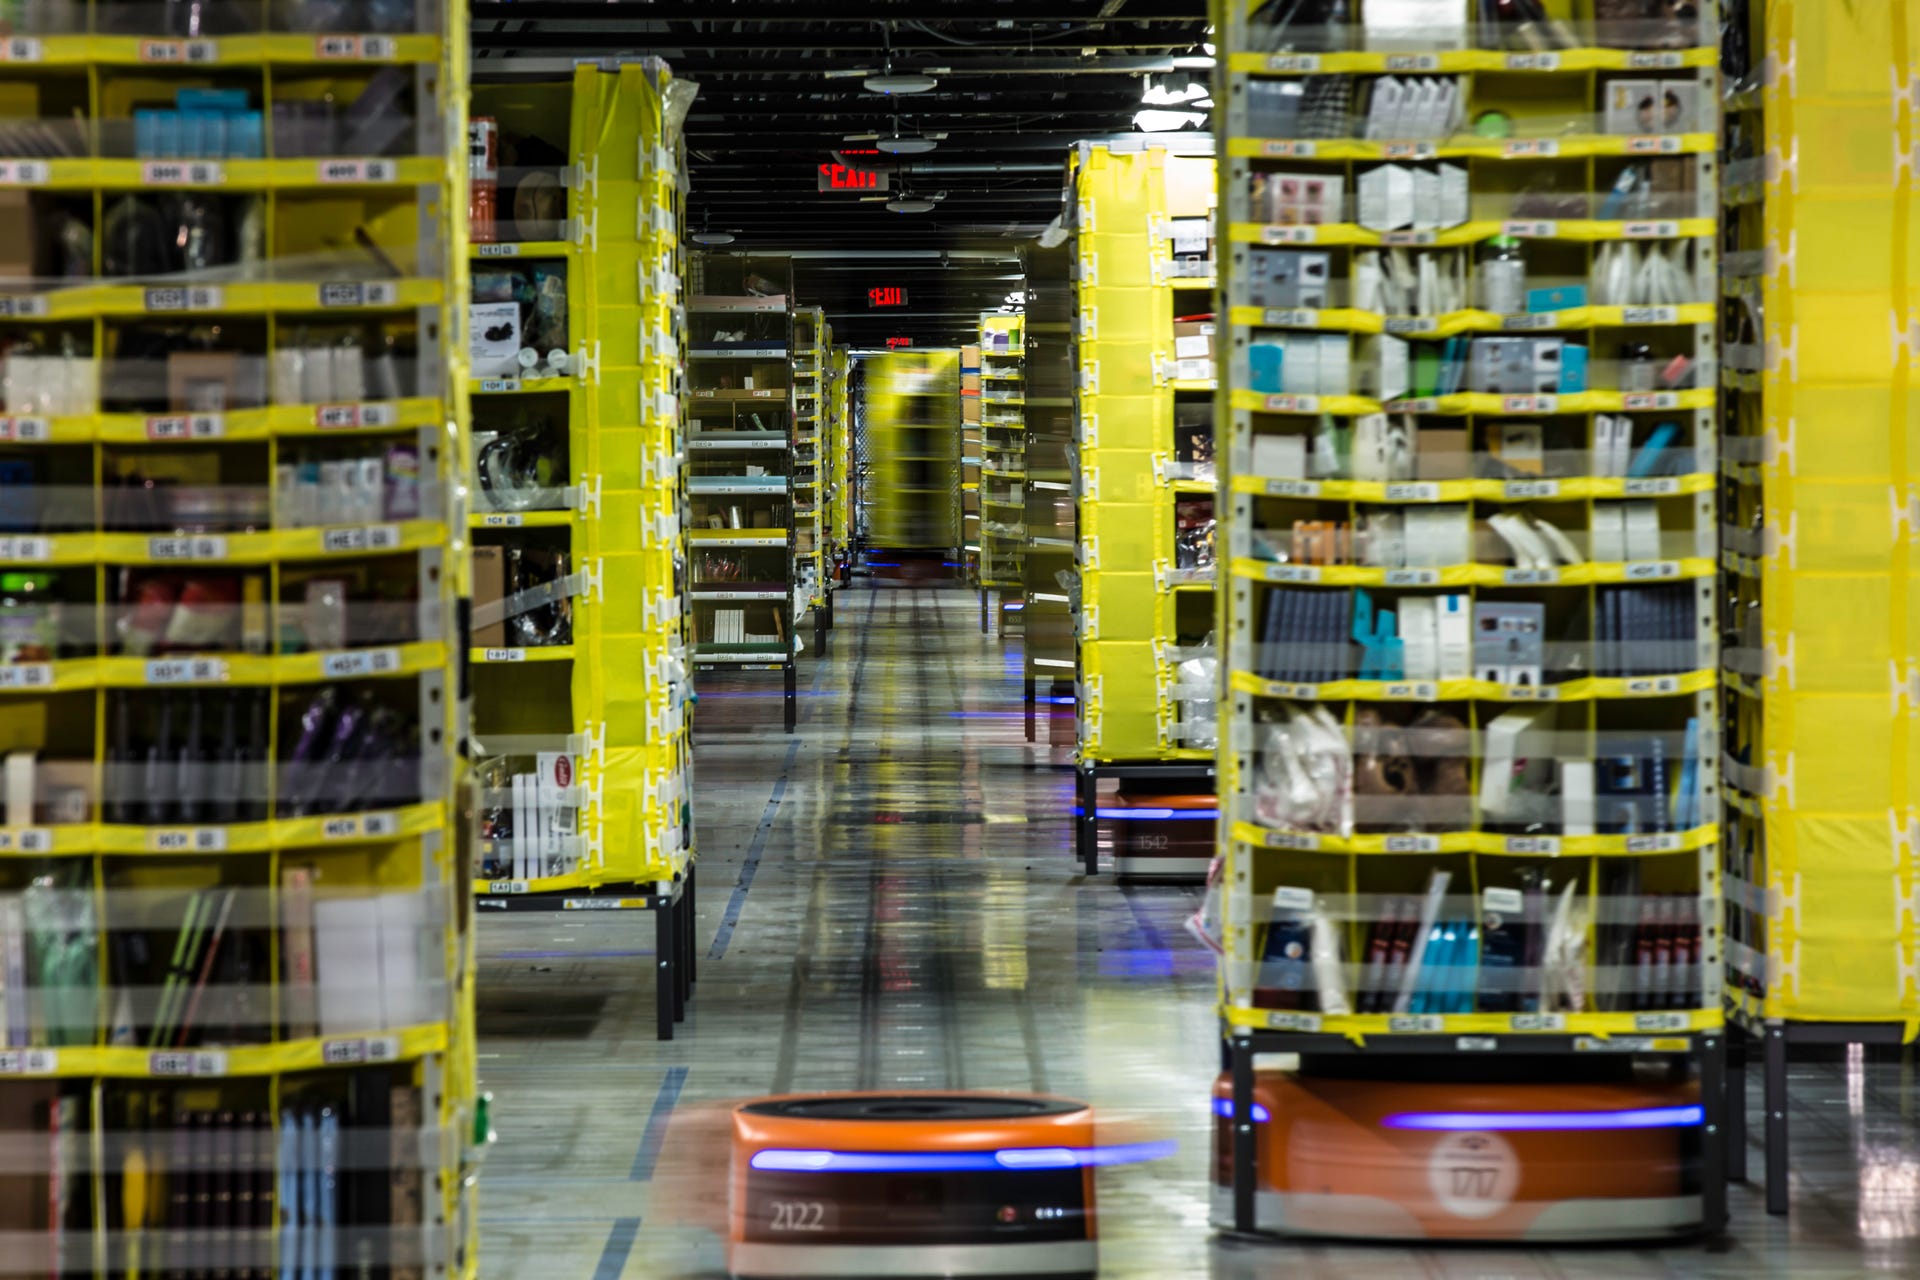 Amazon warehouse shipping fulfillment center